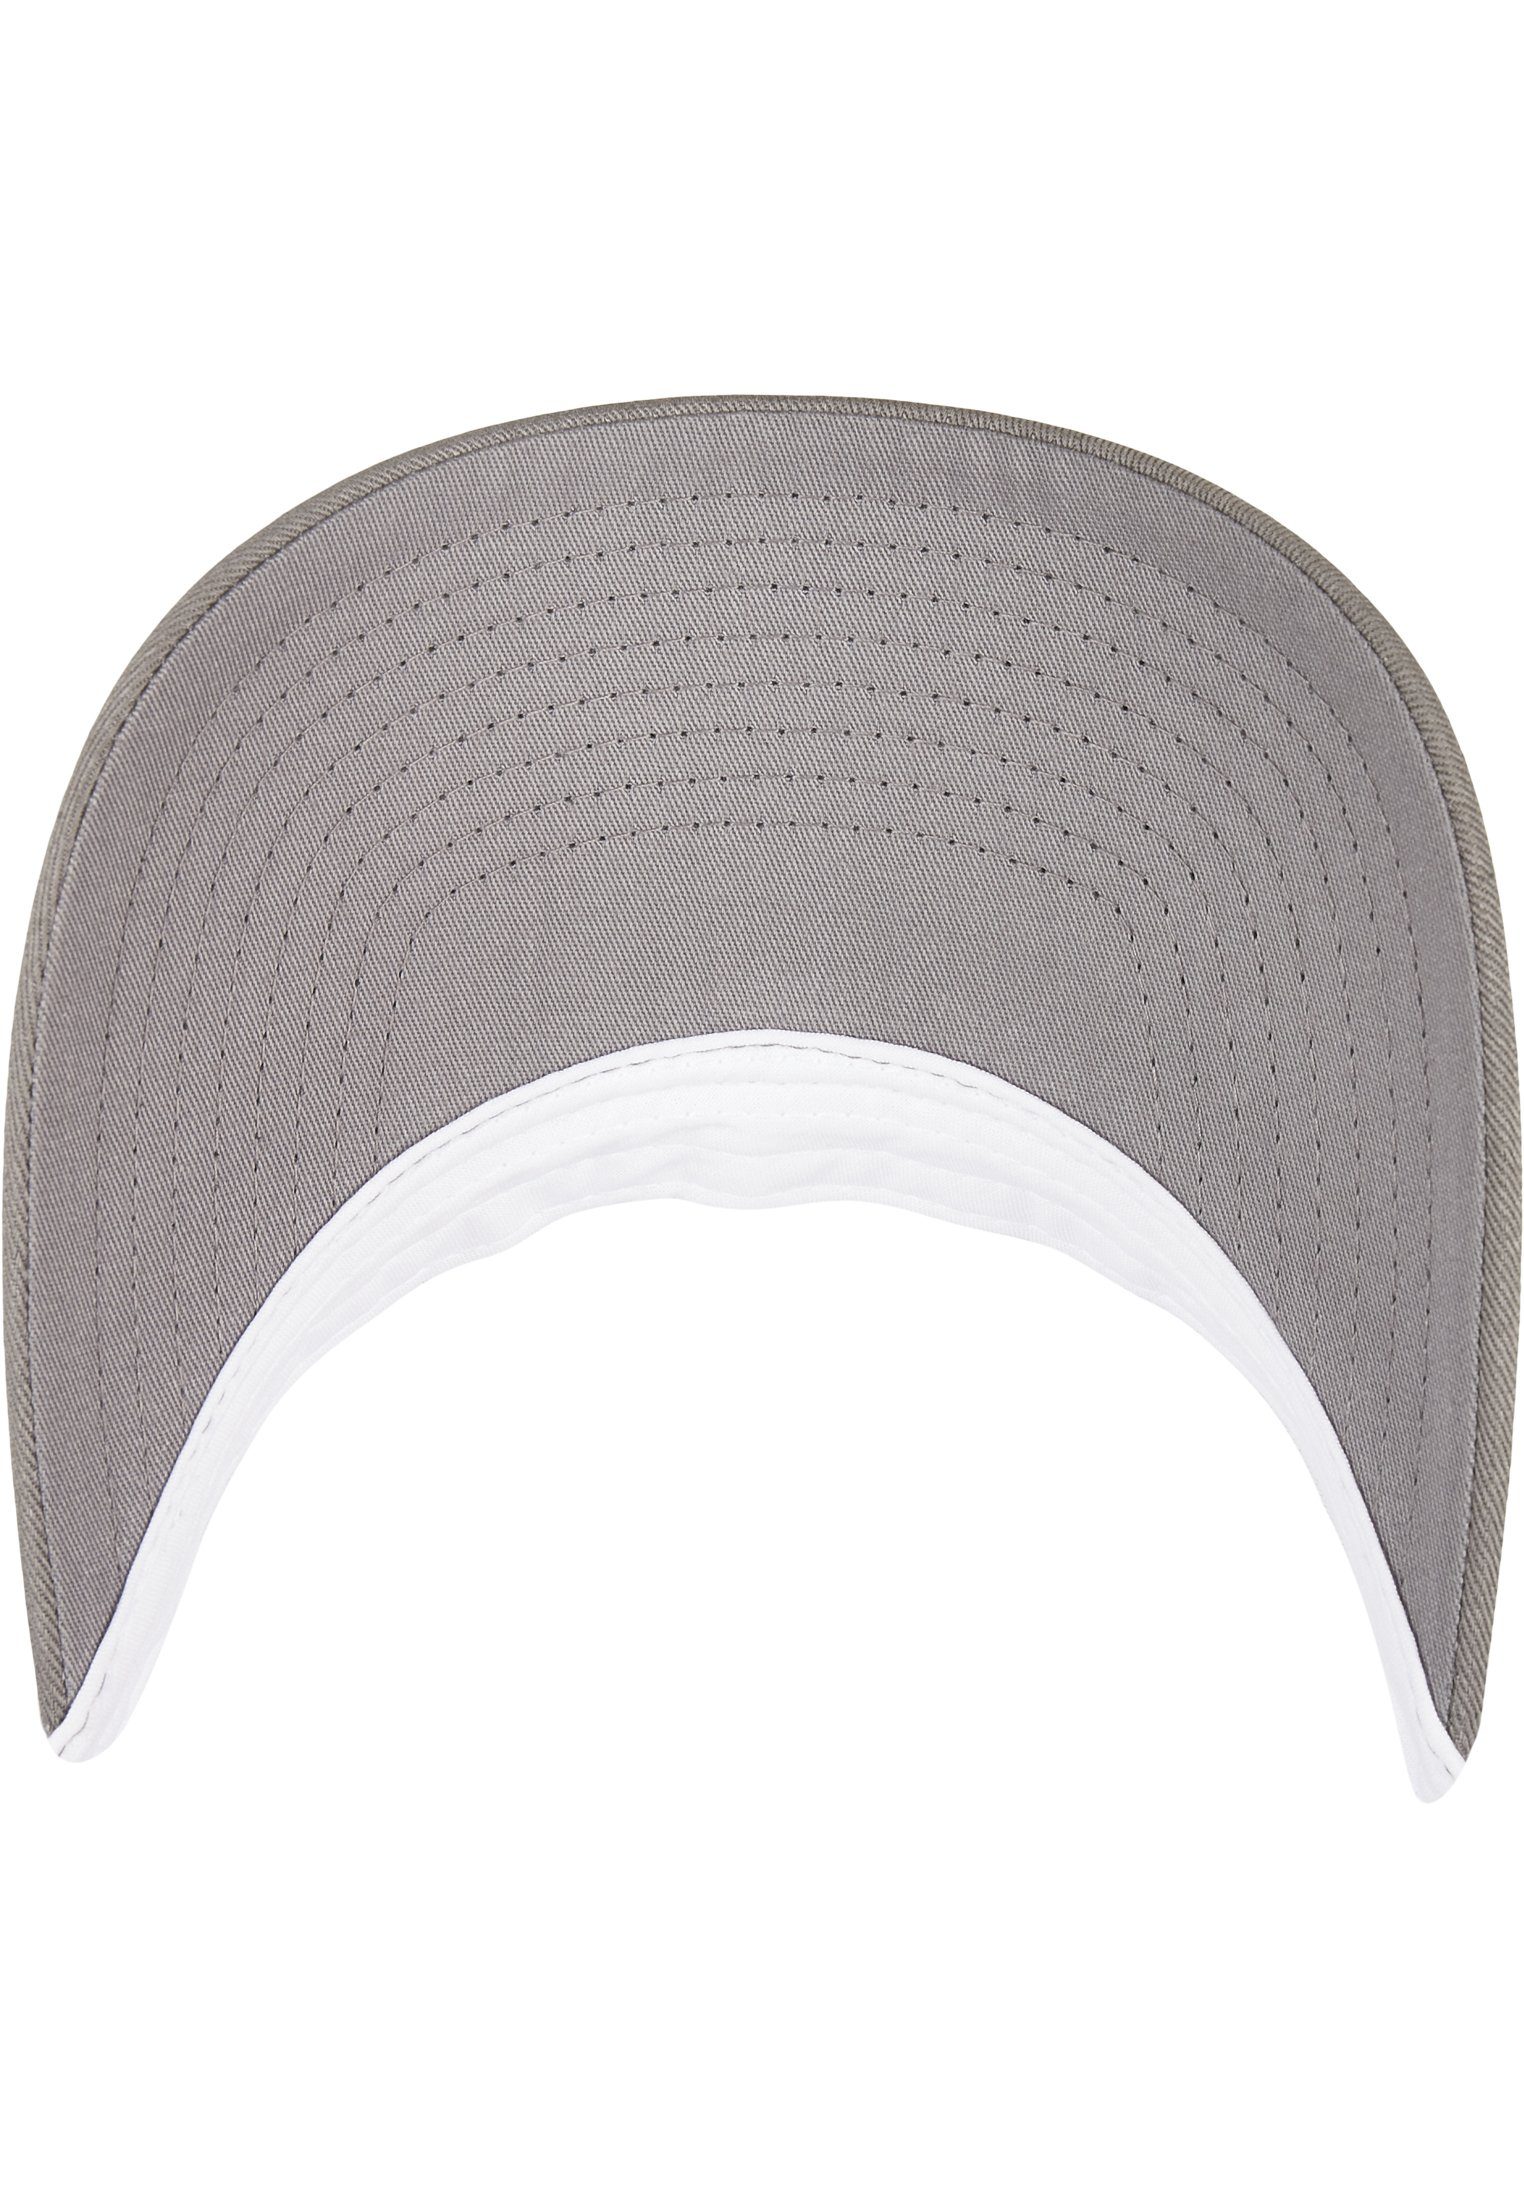 Flexfit Flex CLASSICS Caps CAP TRUCKER Cap grey/white YP RETRO RECYCLED 2-TONE